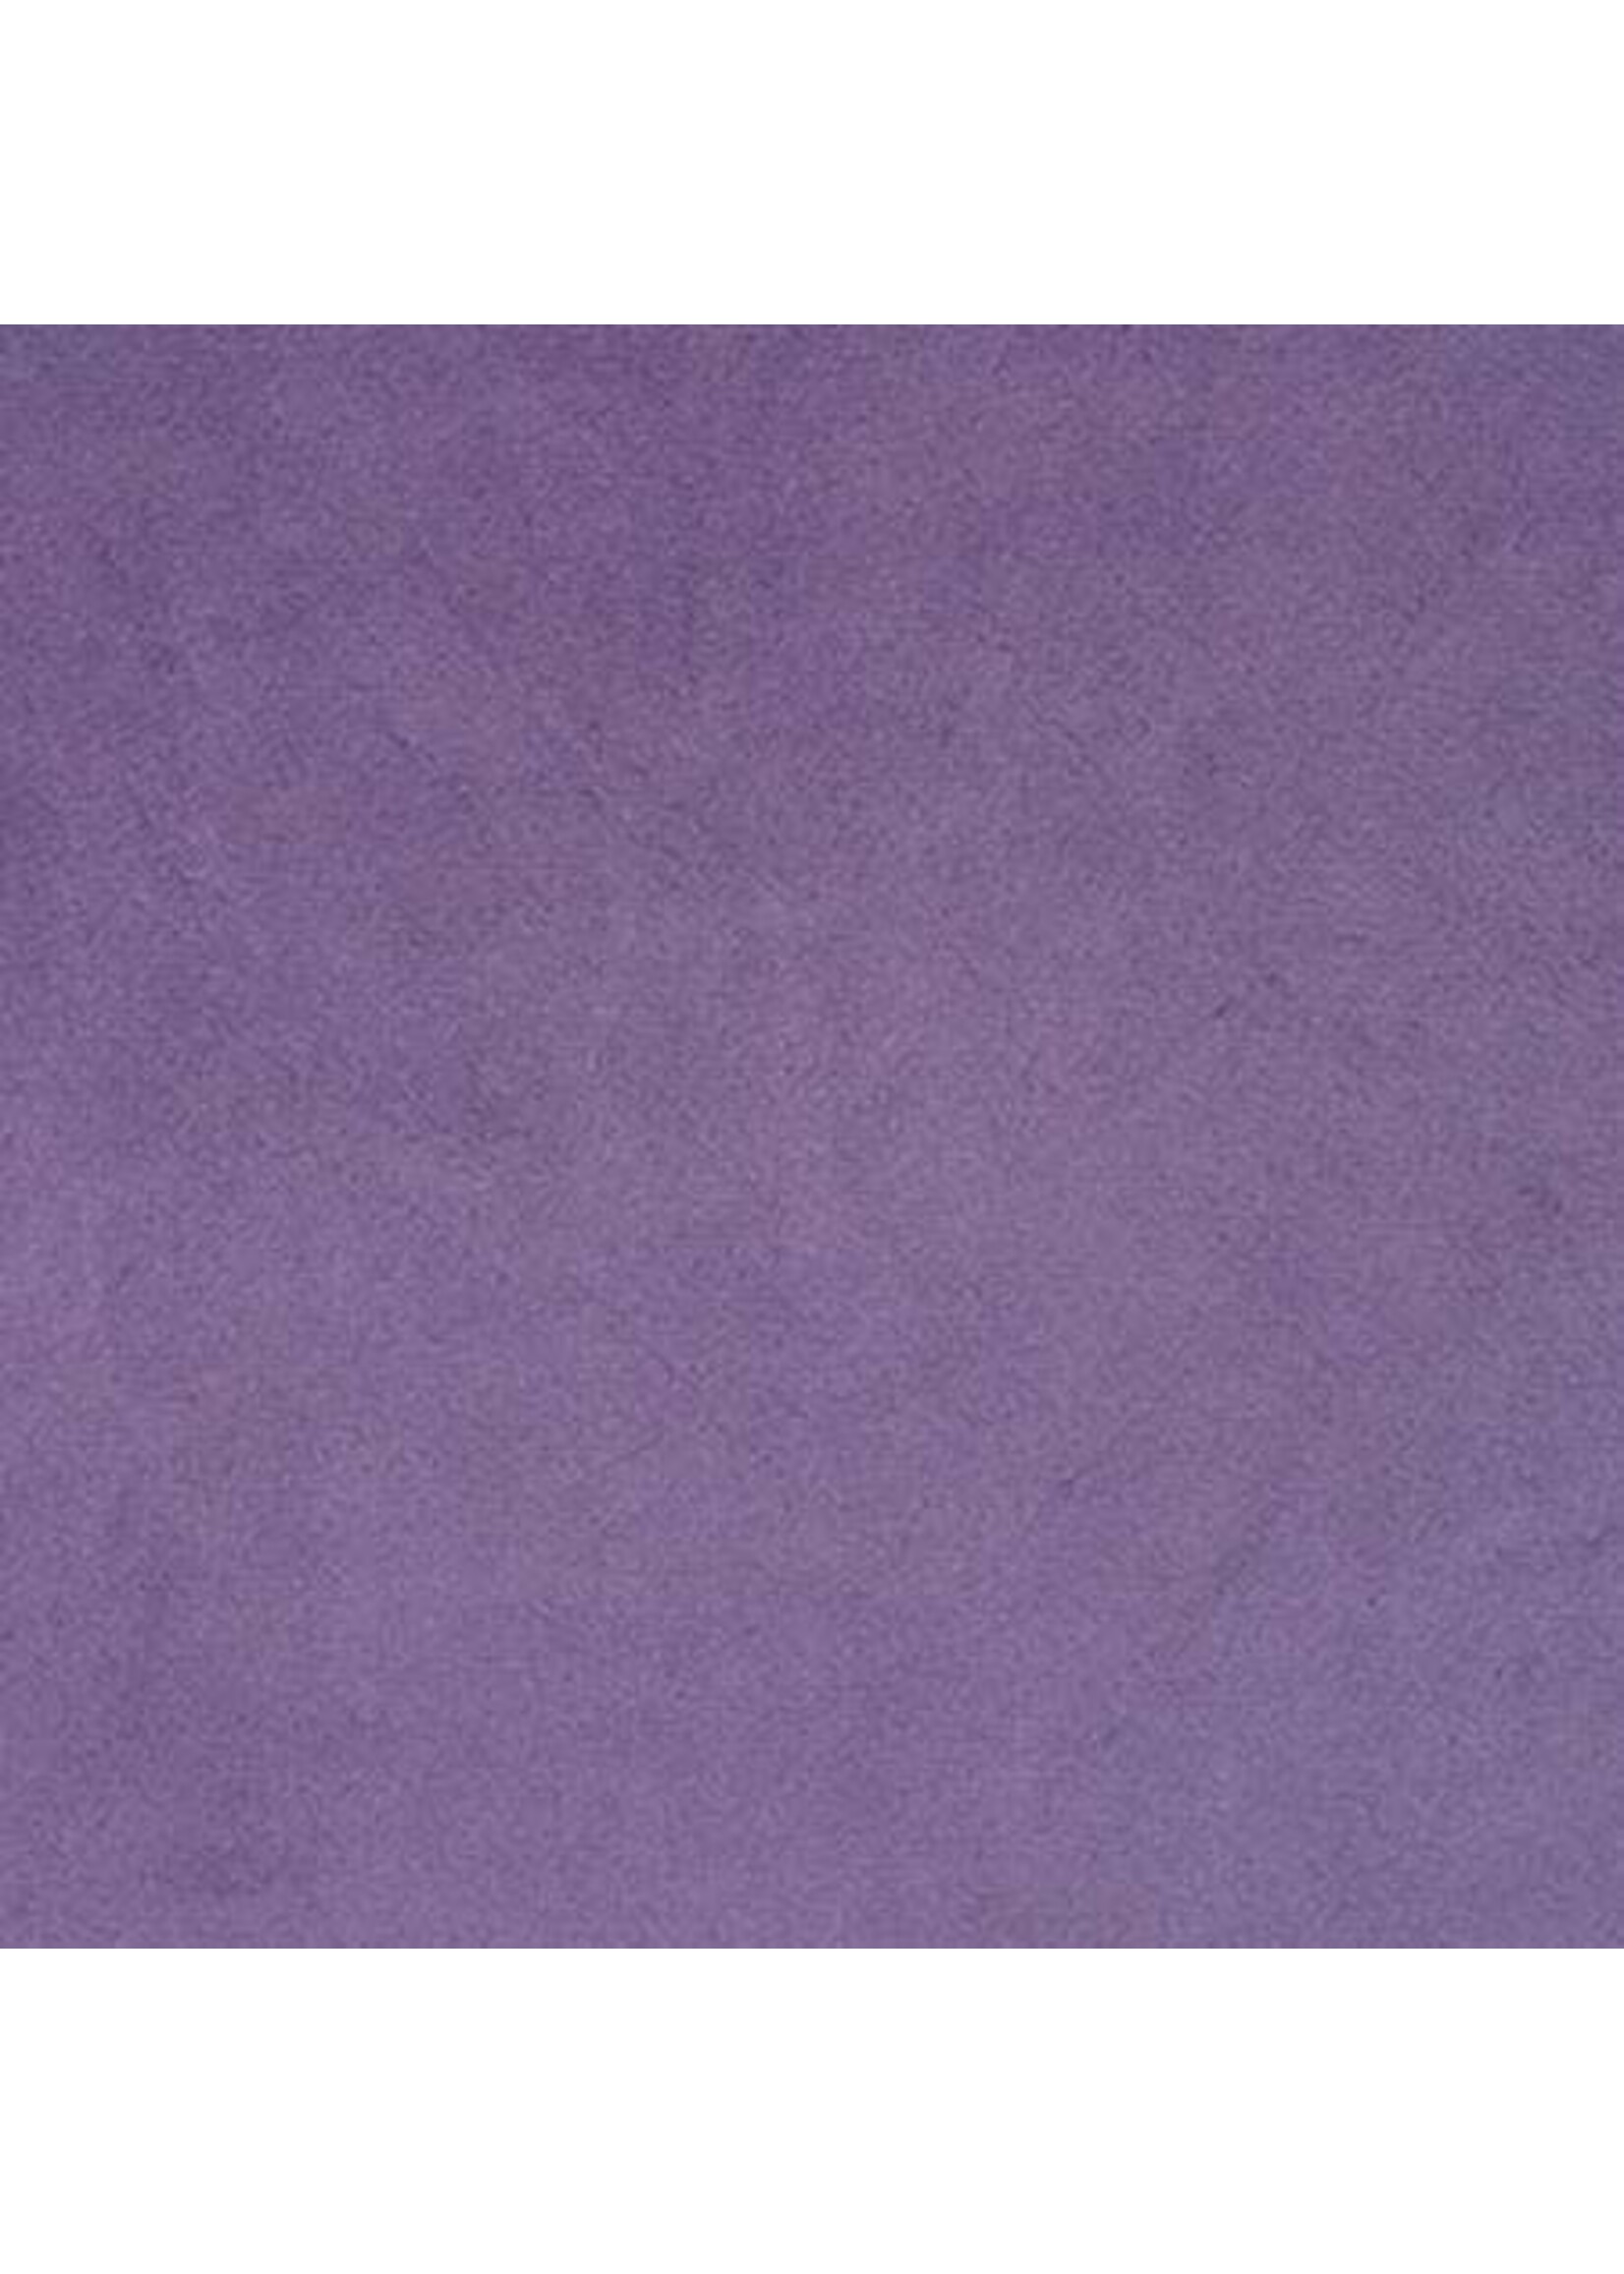 Shannon Fabrics Cuddle - Solid - Violet